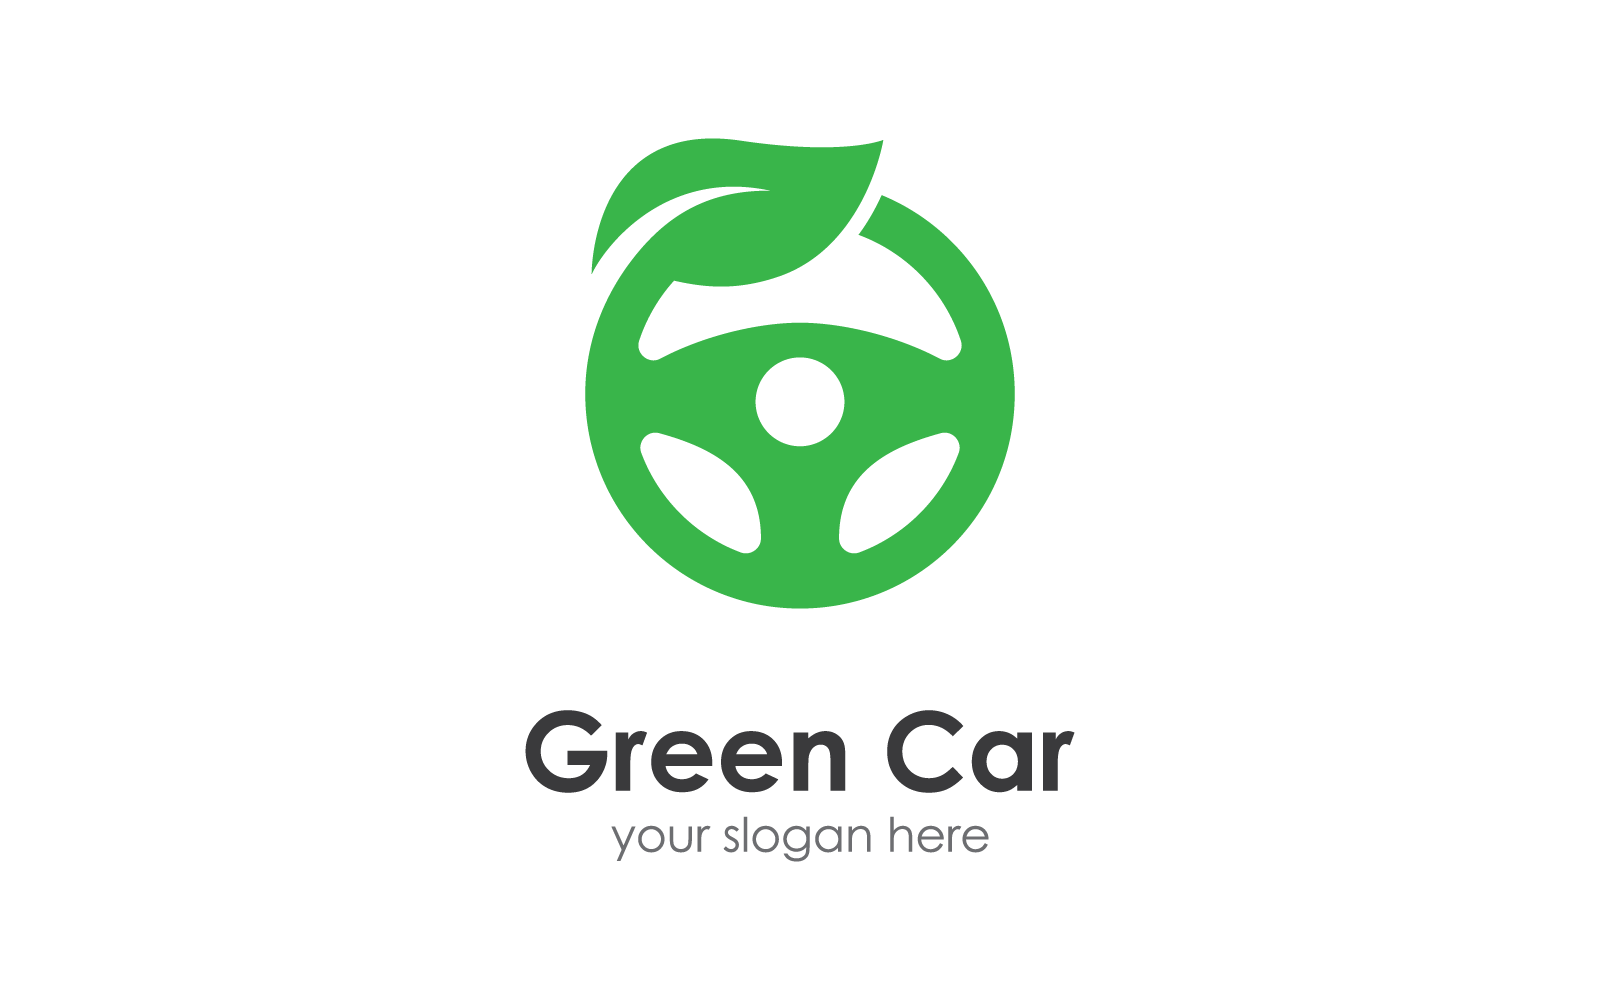 Steering wheel green car logo vector template